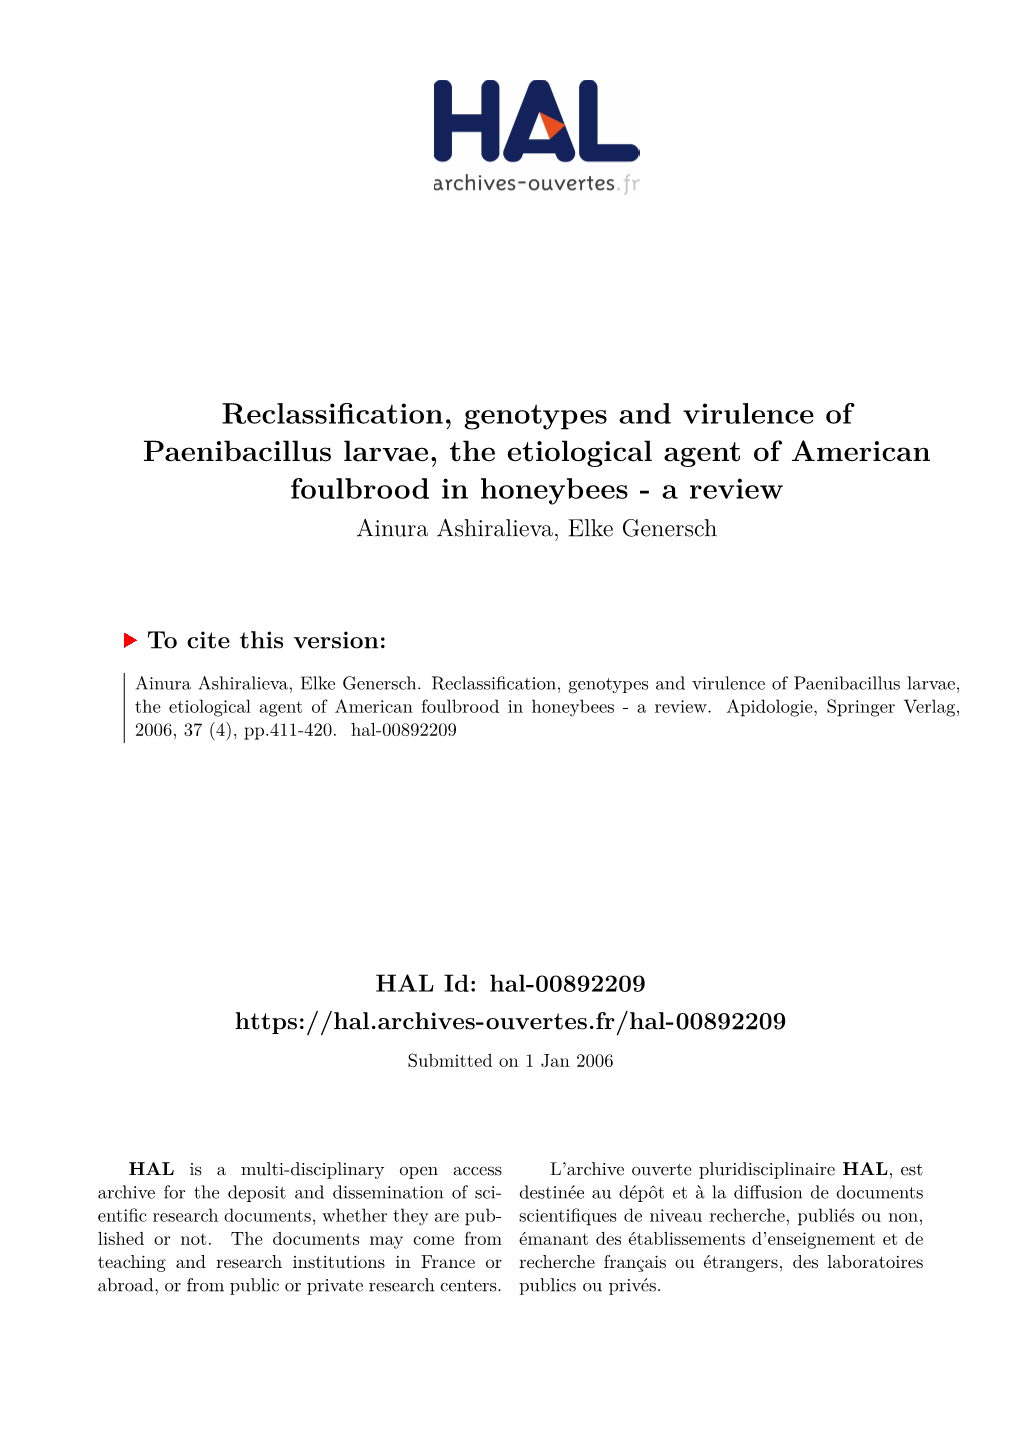 Reclassification, Genotypes and Virulence of Paenibacillus Larvae